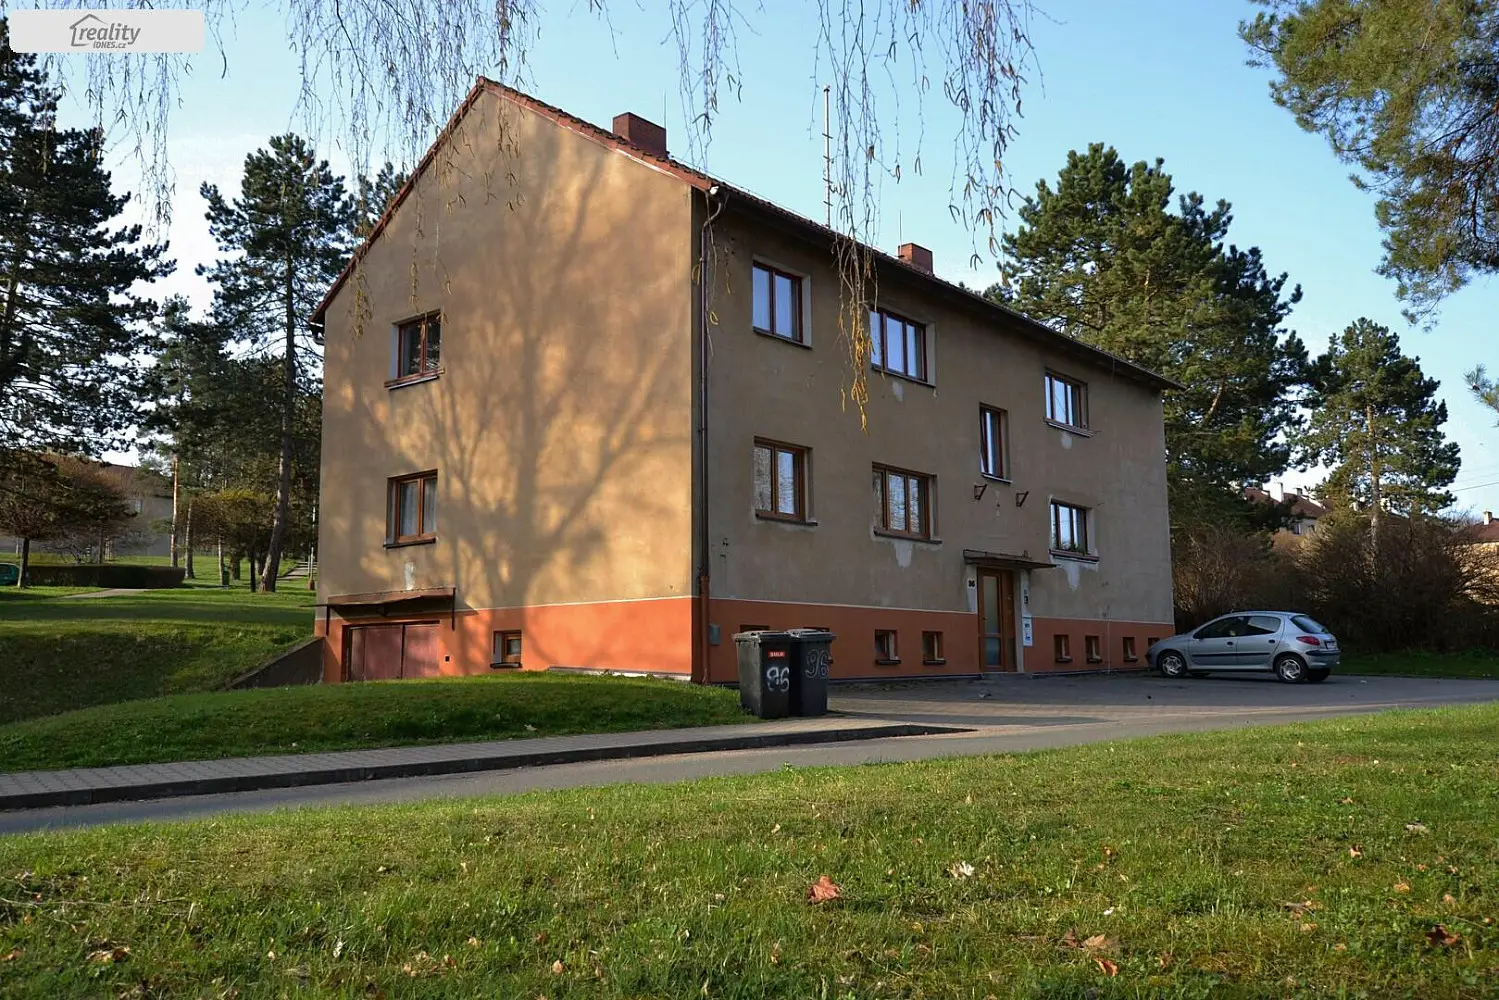 Československé armády, Chvaletice, okres Pardubice